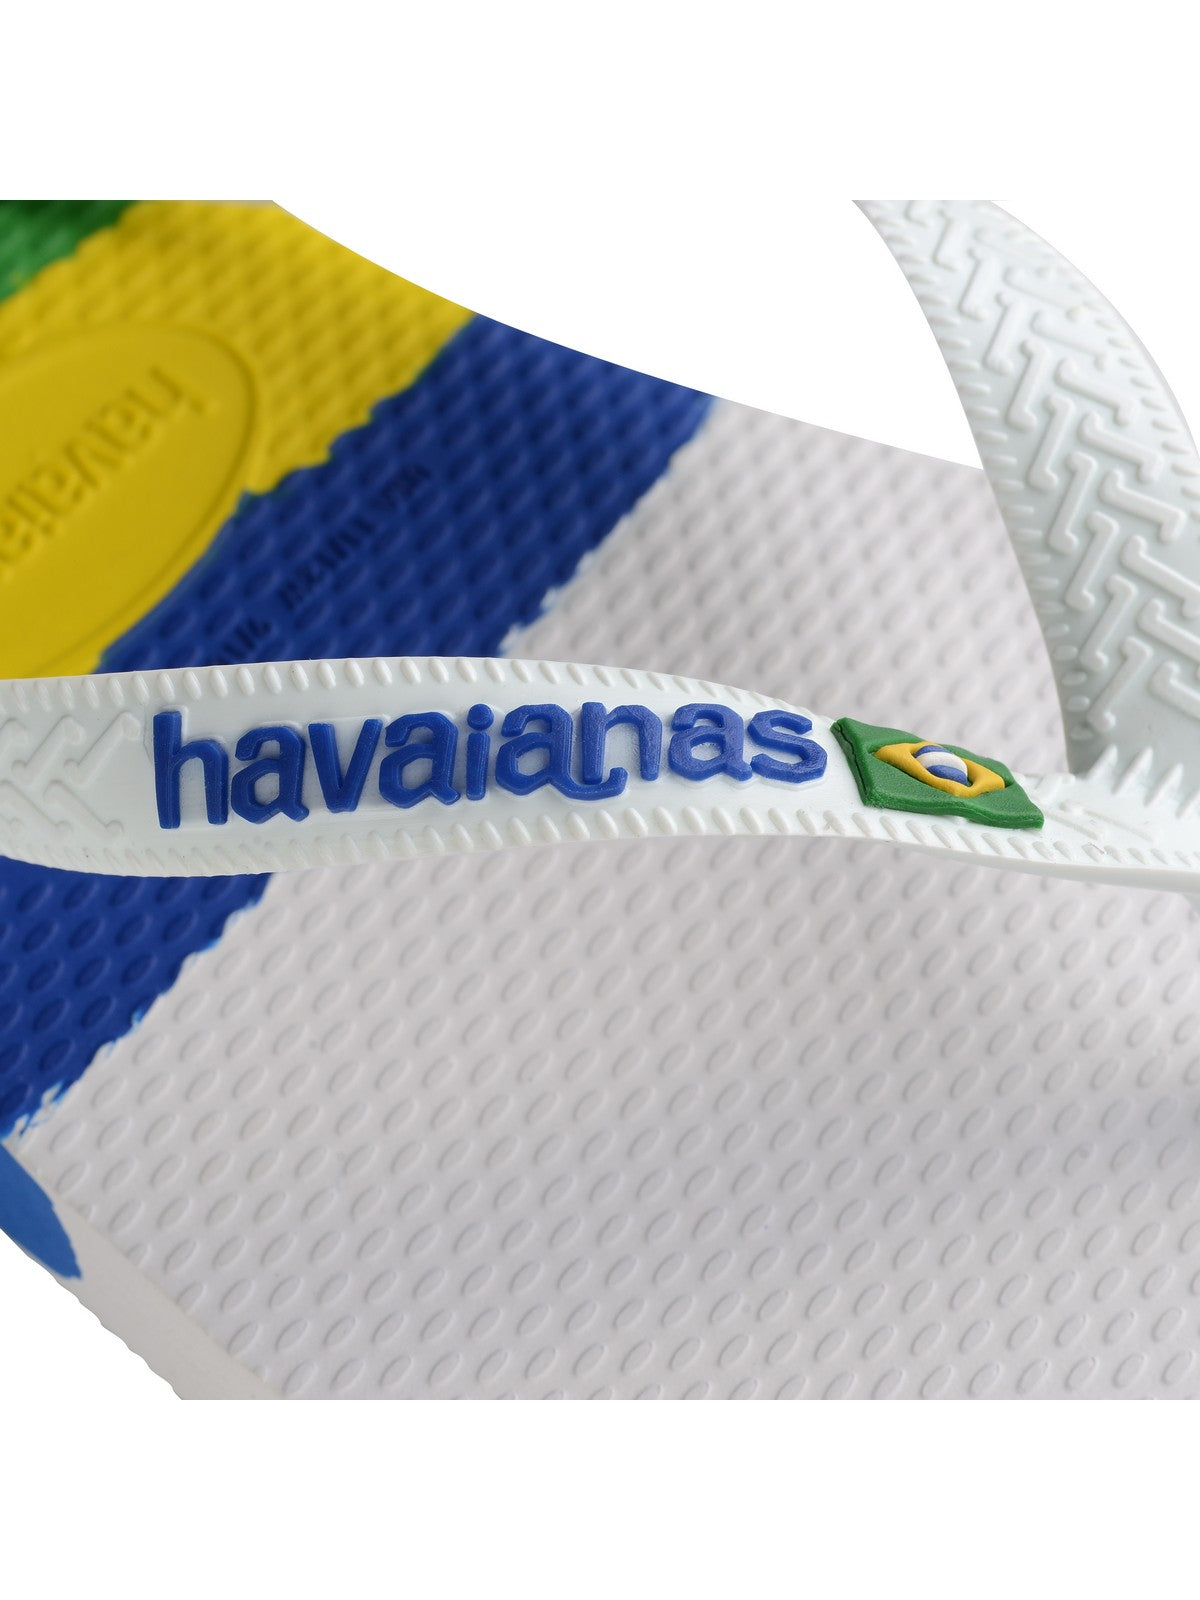 HAVAIANAS Infradito Unisex adulto Hav. Brasil Tech 4147239.0001 Bianco